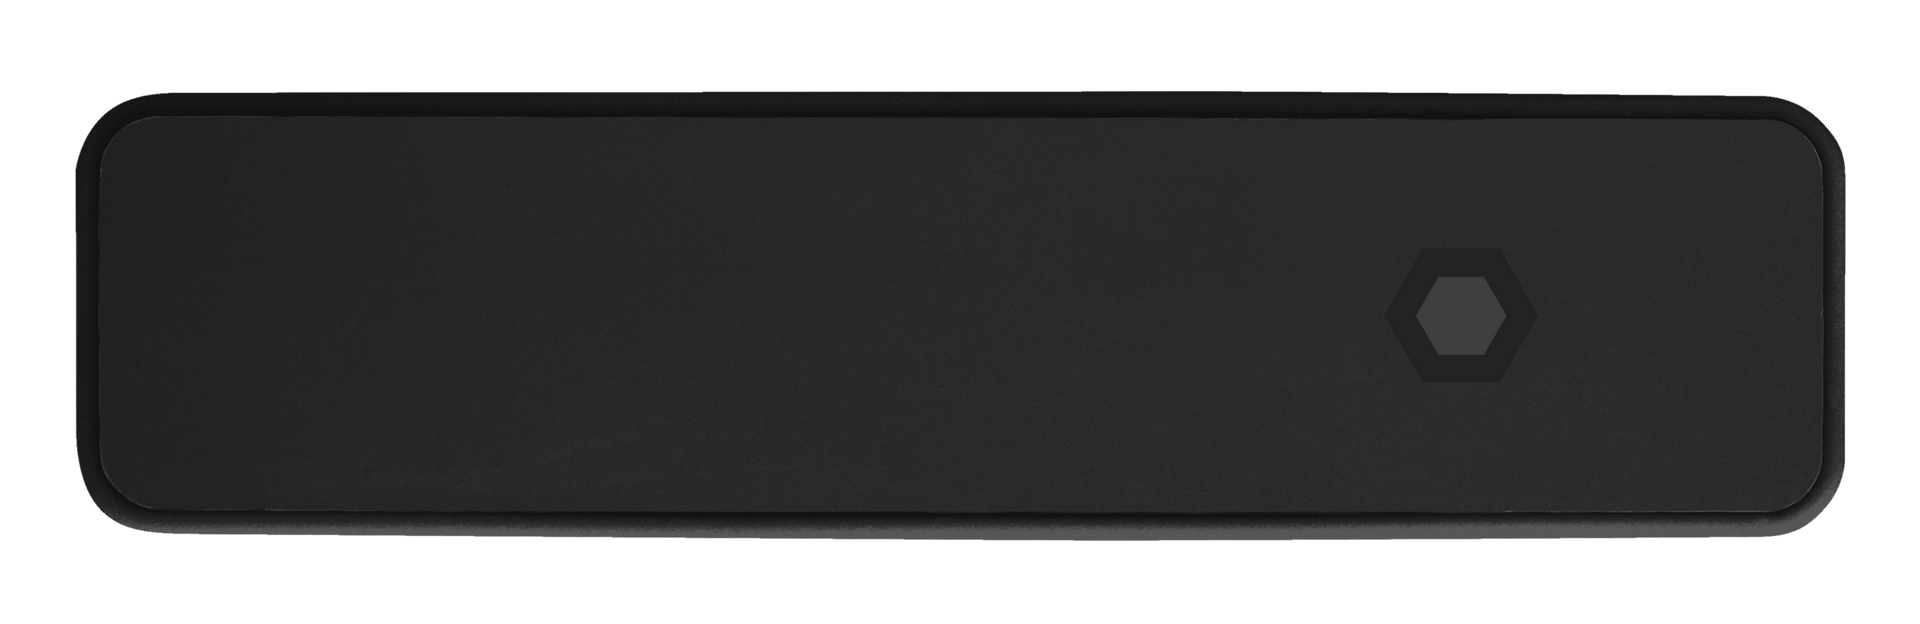 PowerBank Portable Phone Charger - black-Bottom